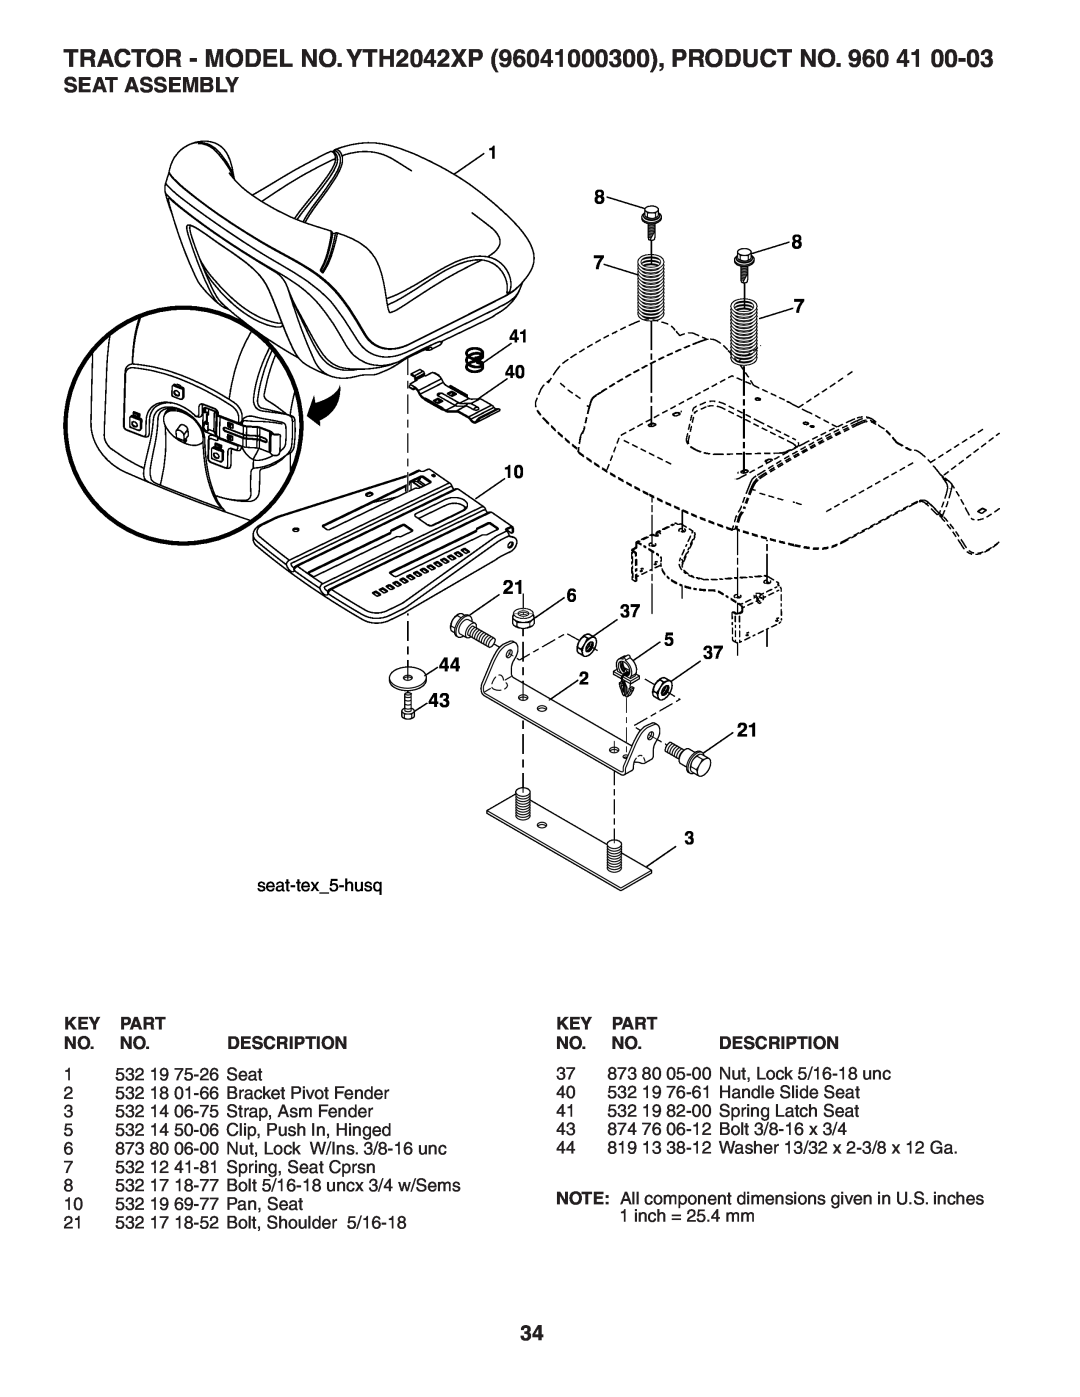 Husqvarna YTH2042XP owner manual Seat Assembly, 41 40 10 216 37 5, Key Part No. No. Description 